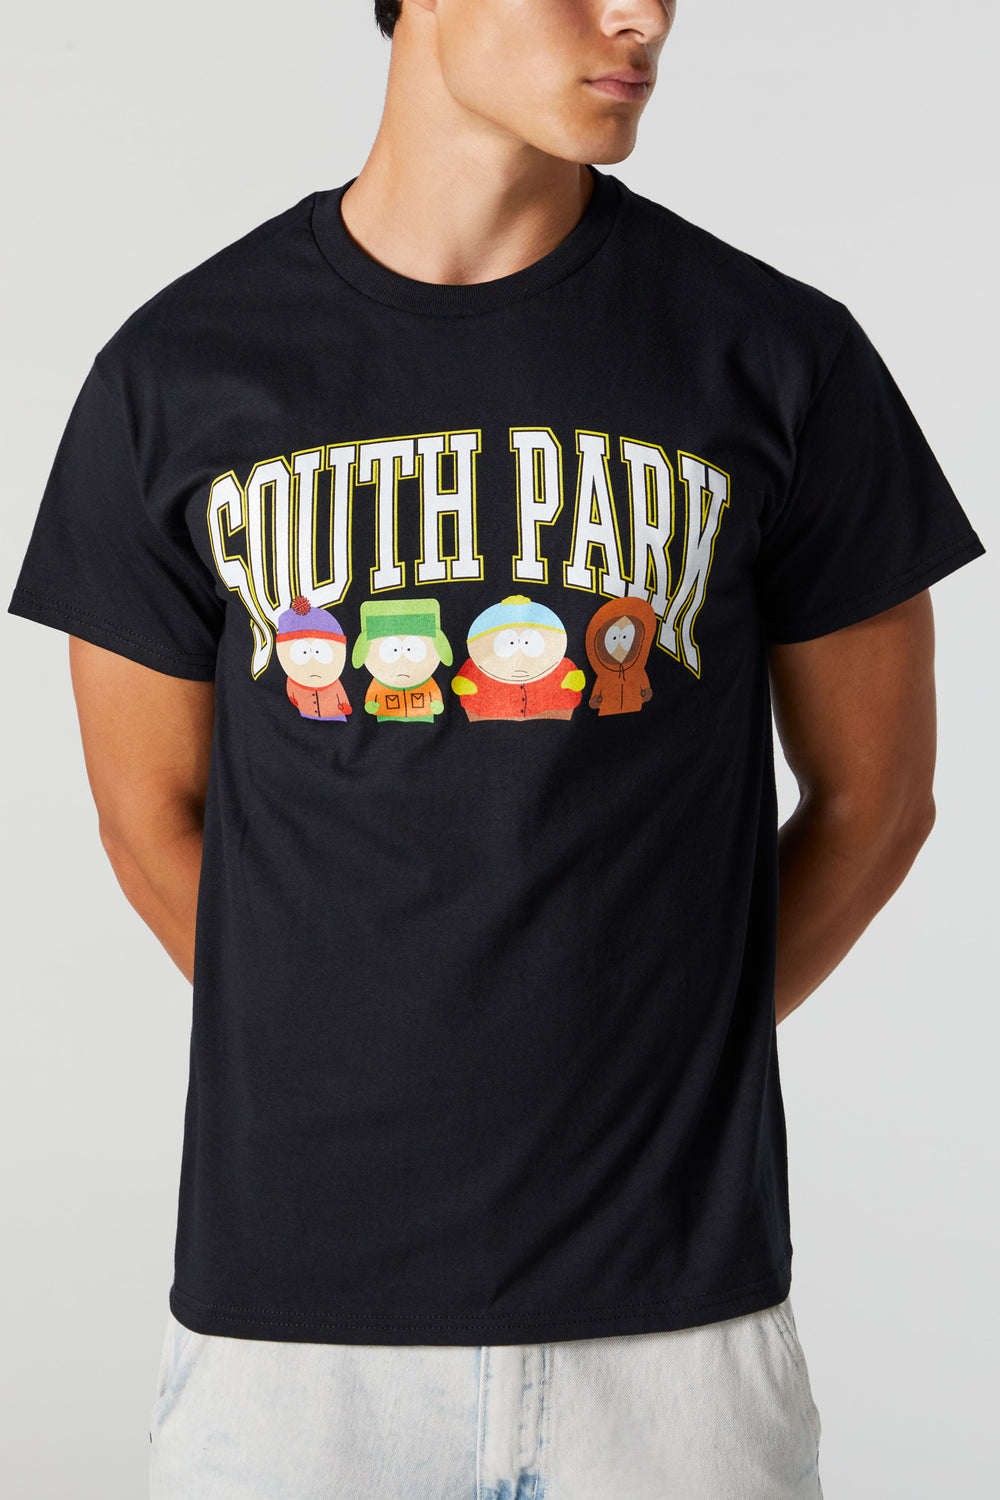 South Park Graphic T-Shirt South Park Graphic T-Shirt 2